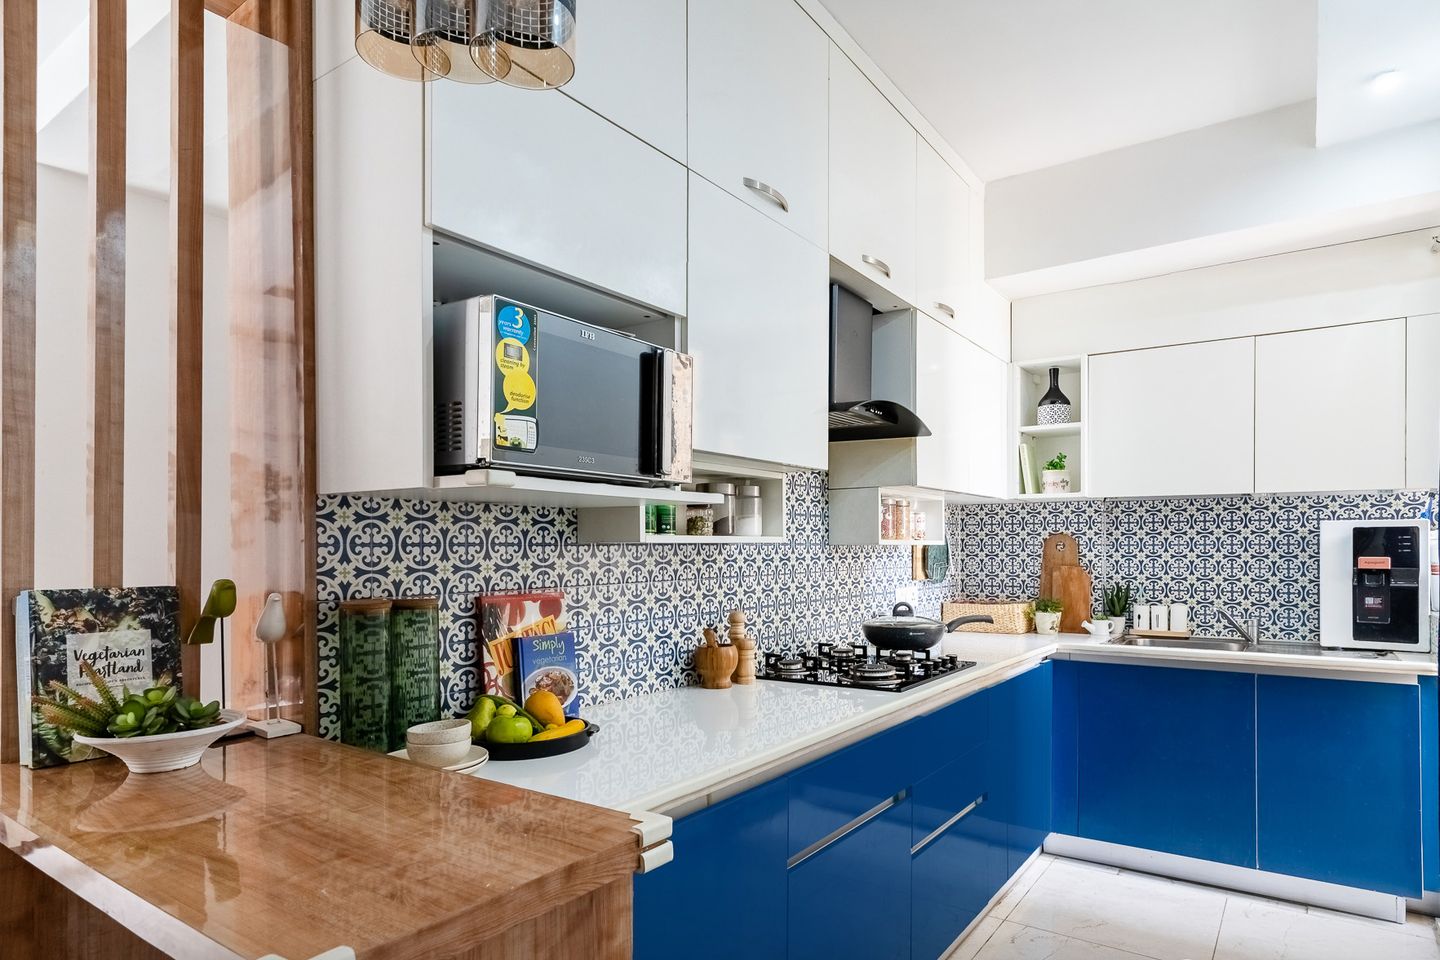 12x10 Ft Kingfisher Blue and Frosty White U-Shaped Modern Kitchen